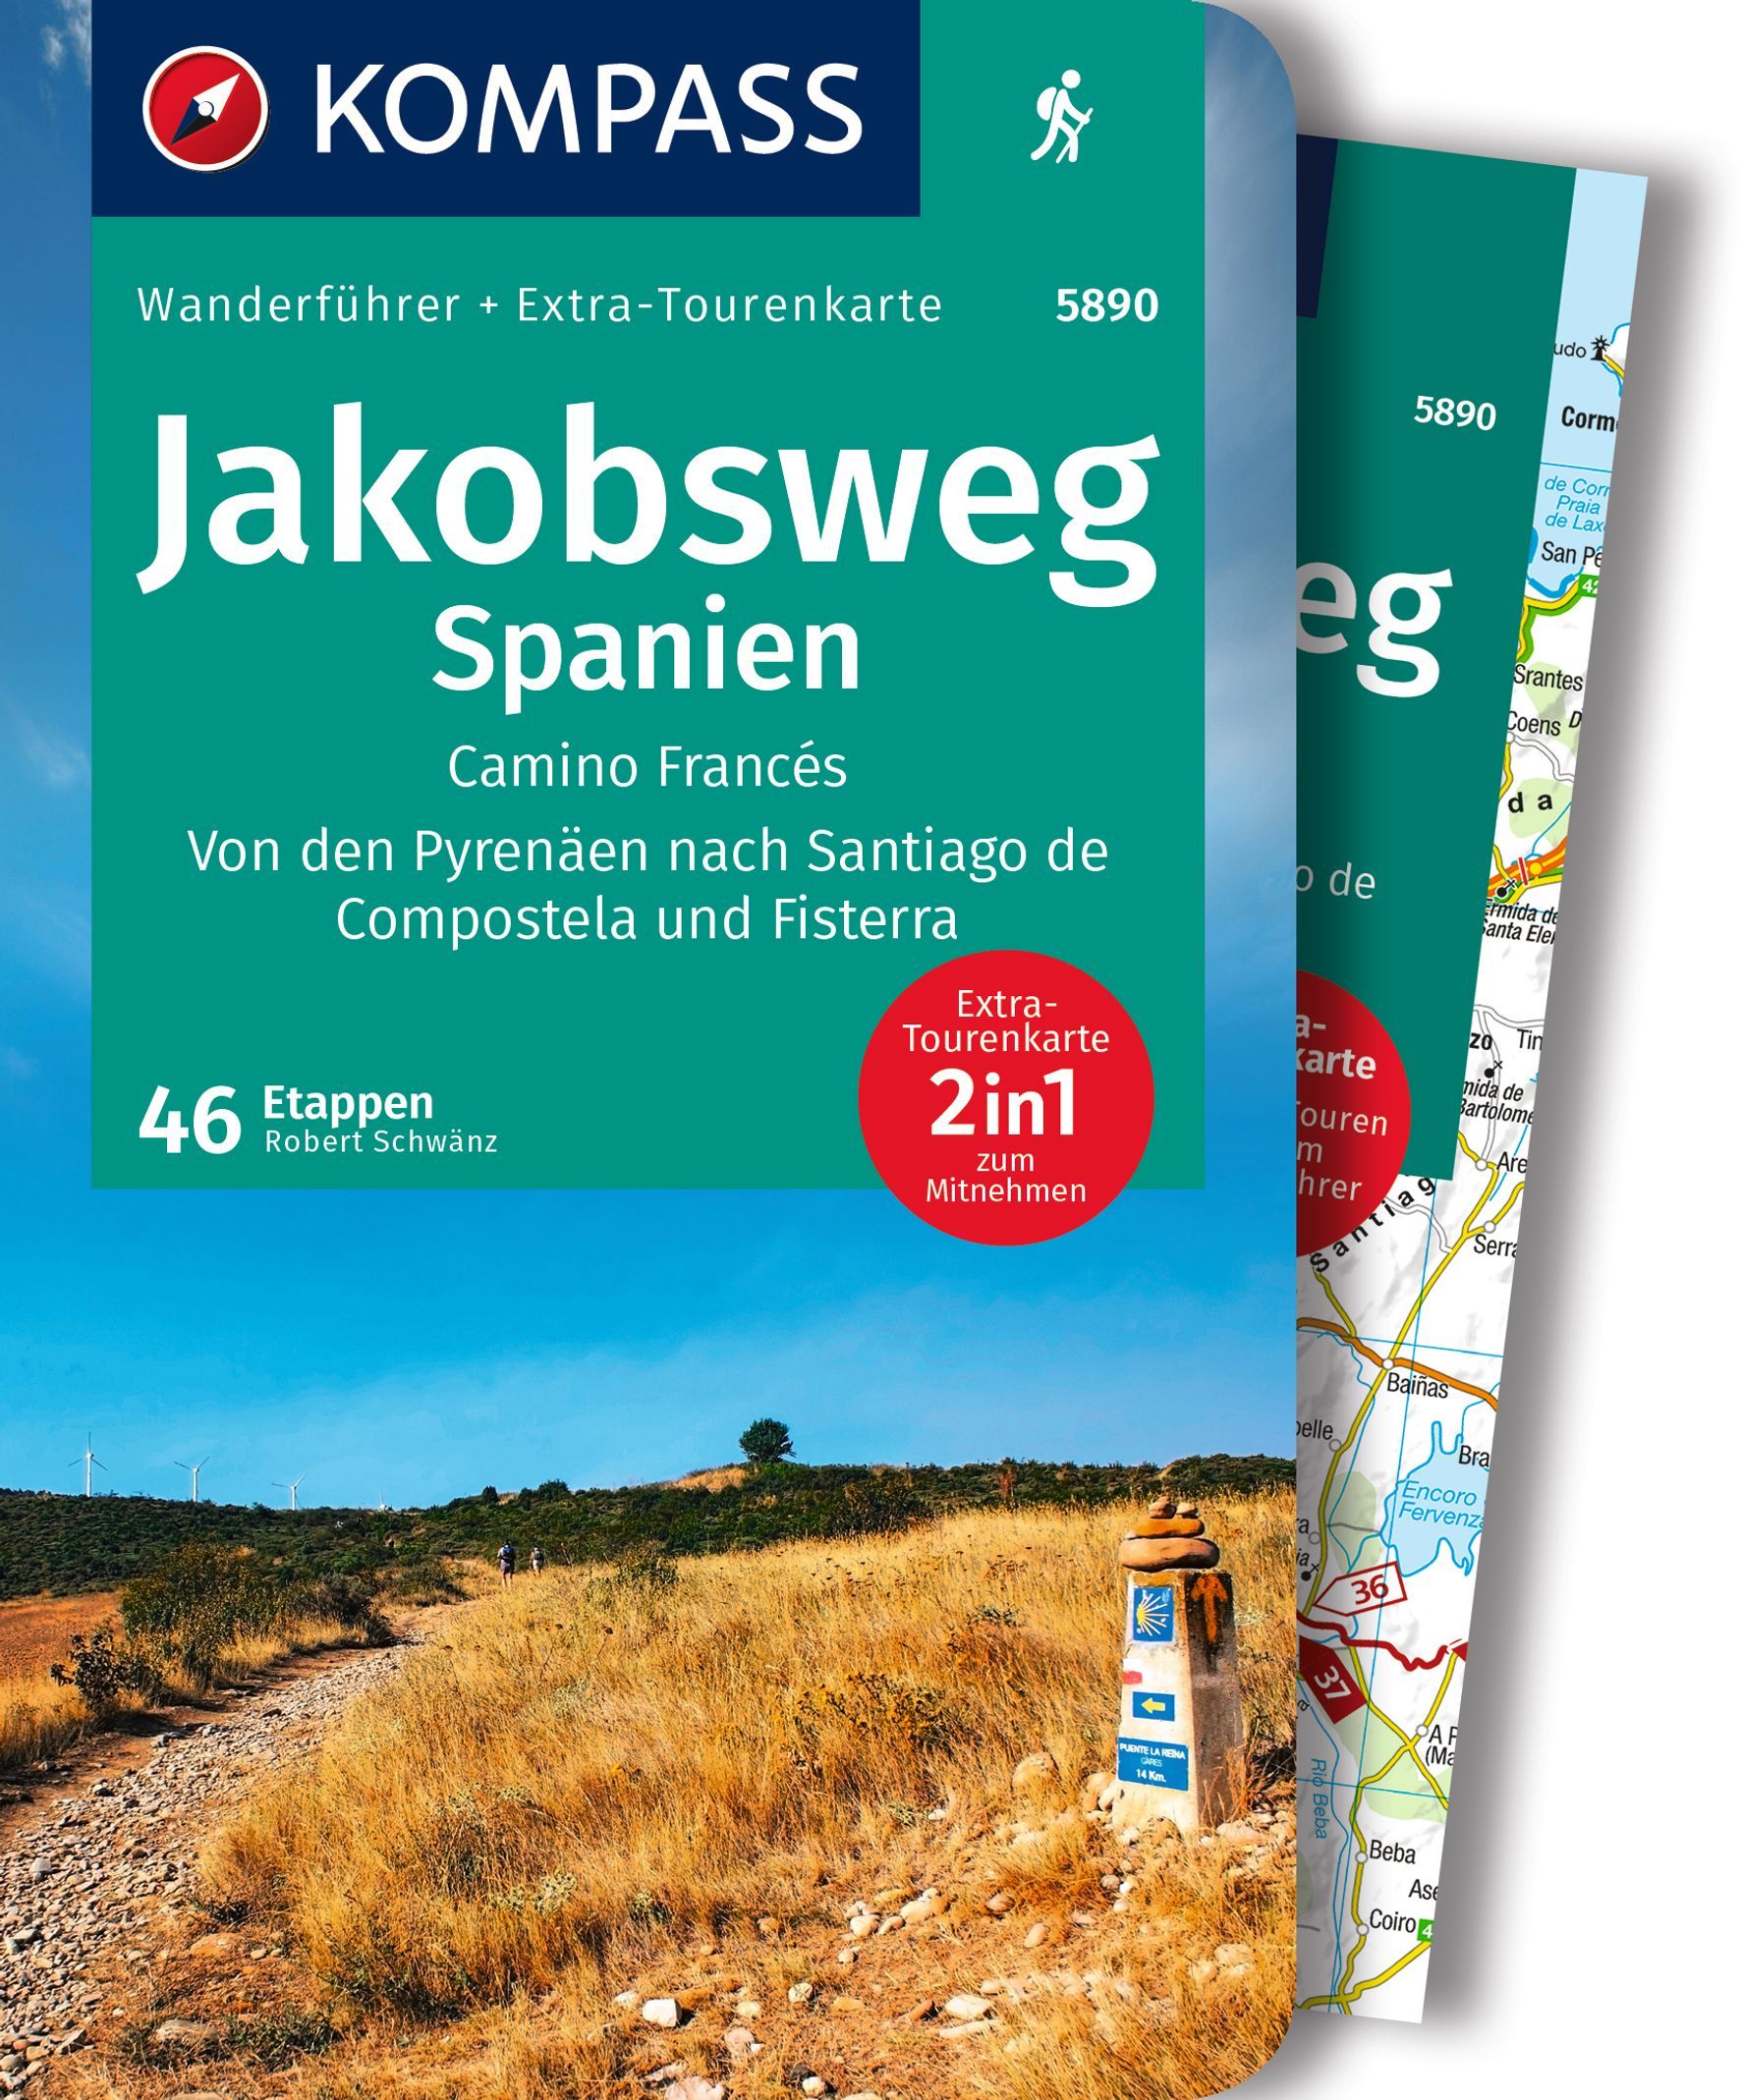 Online bestellen: Wandelgids - Pelgrimsroute 5890 Jakobsweg Spanien - Camino Francés | Kompass